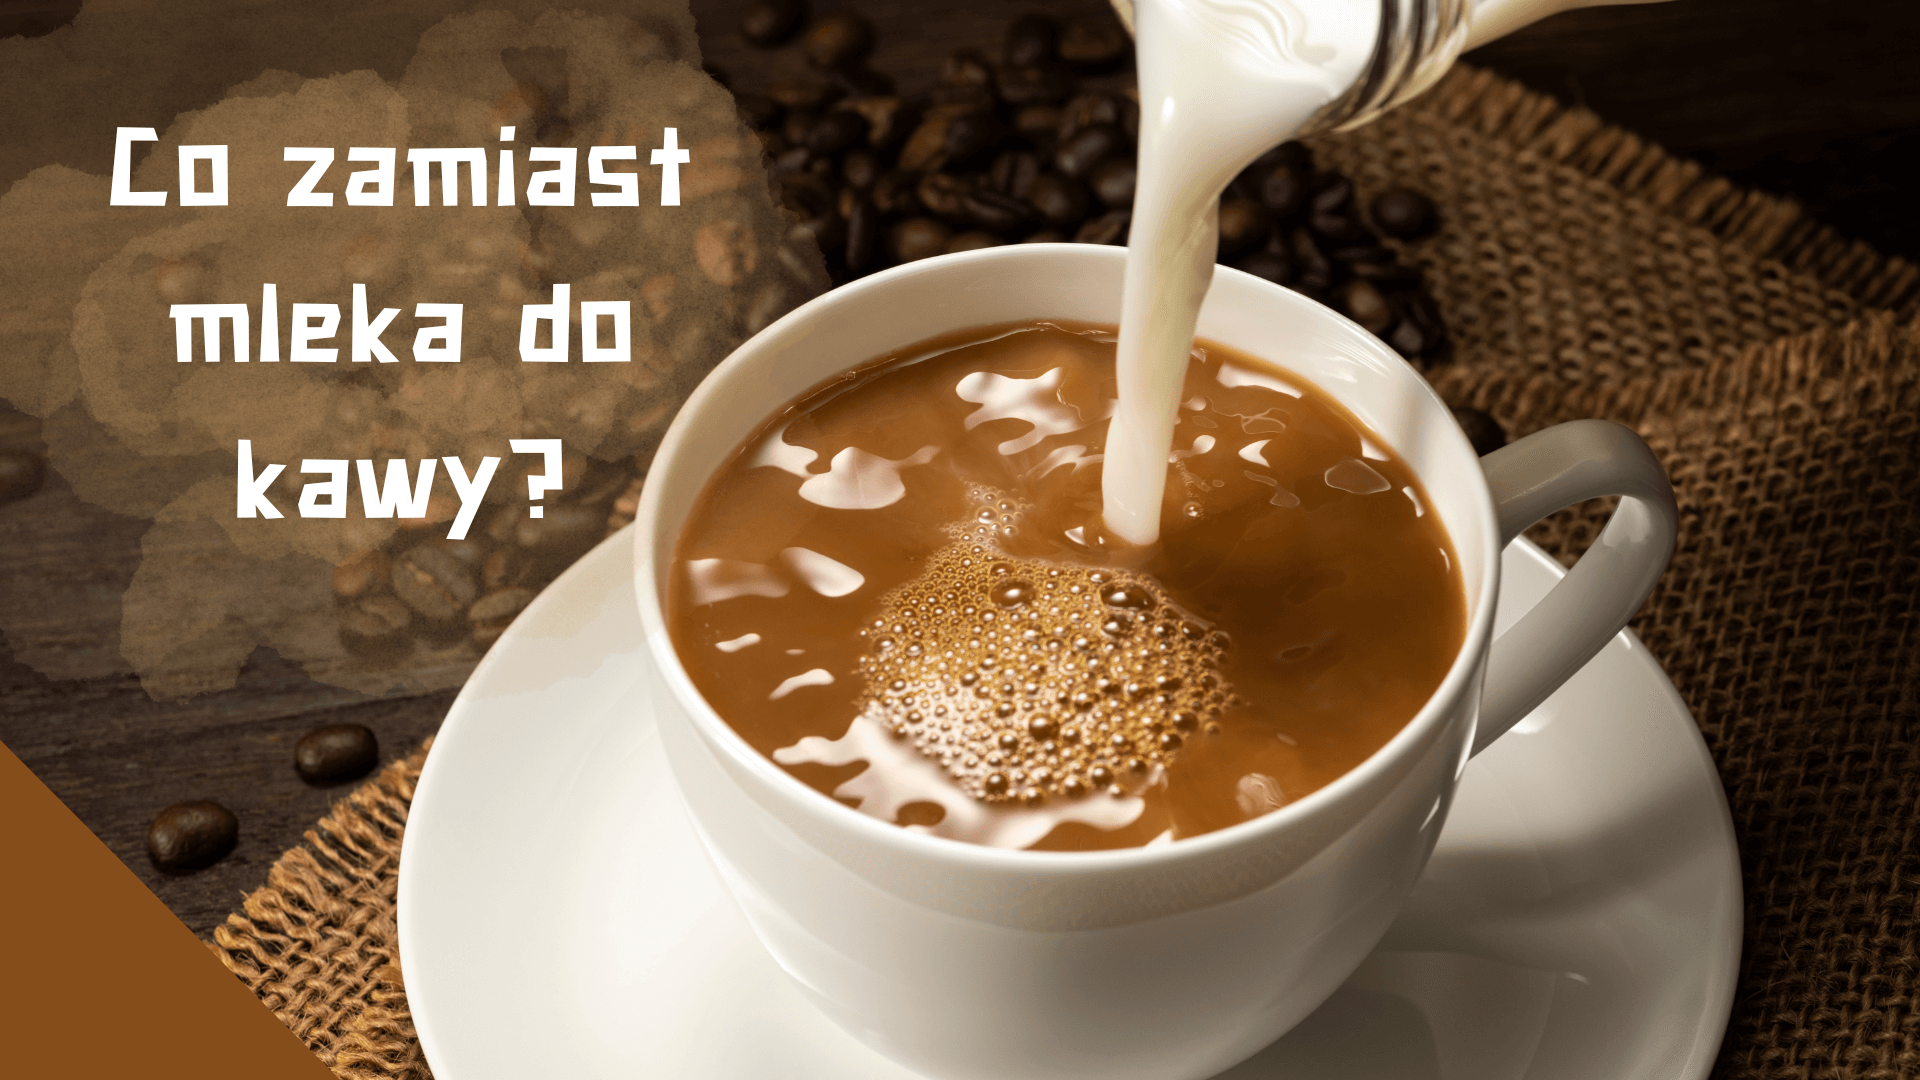 Co zamiast mleka do kawy?